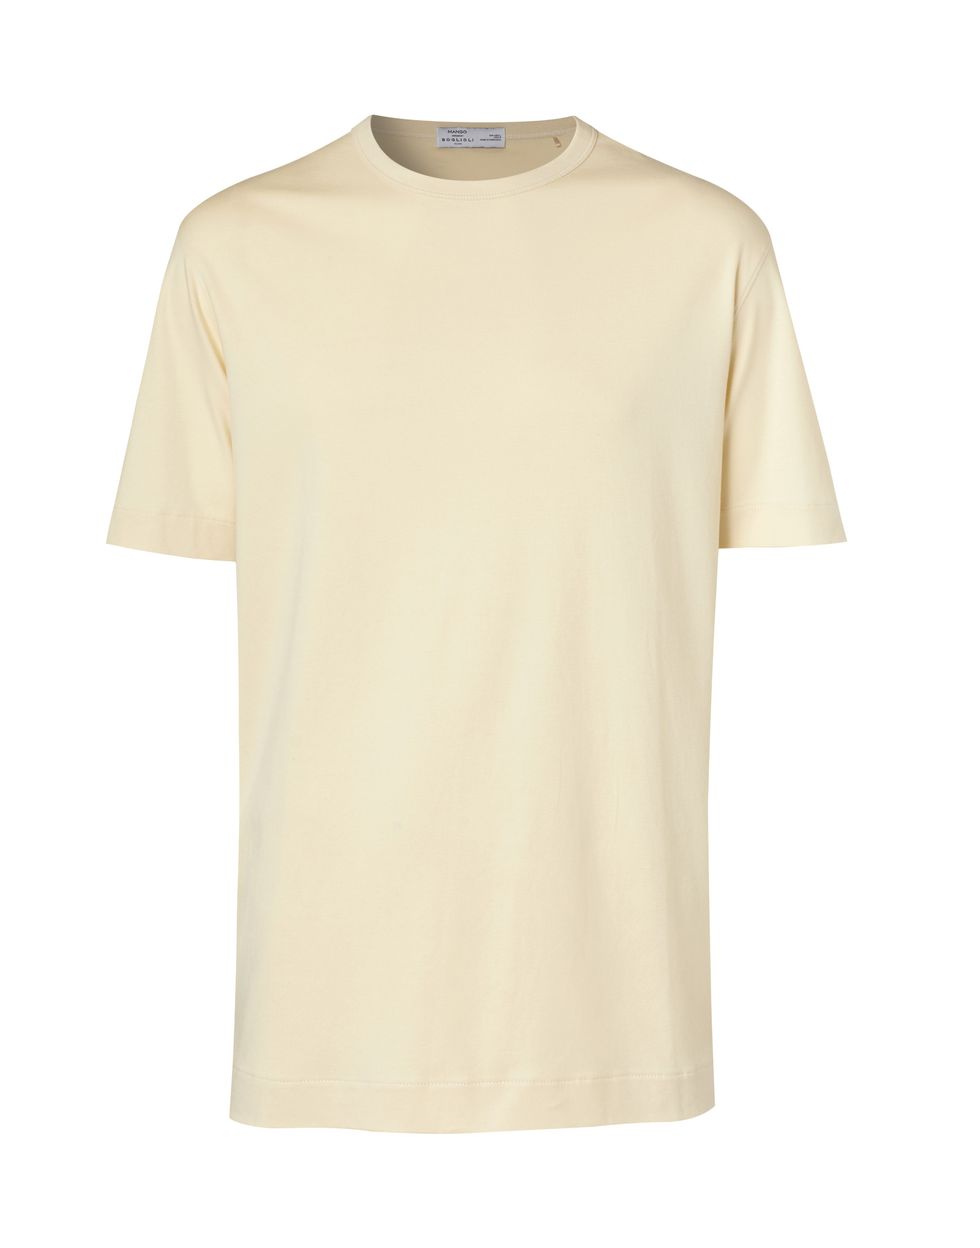 Camiseta slim fit de algodón